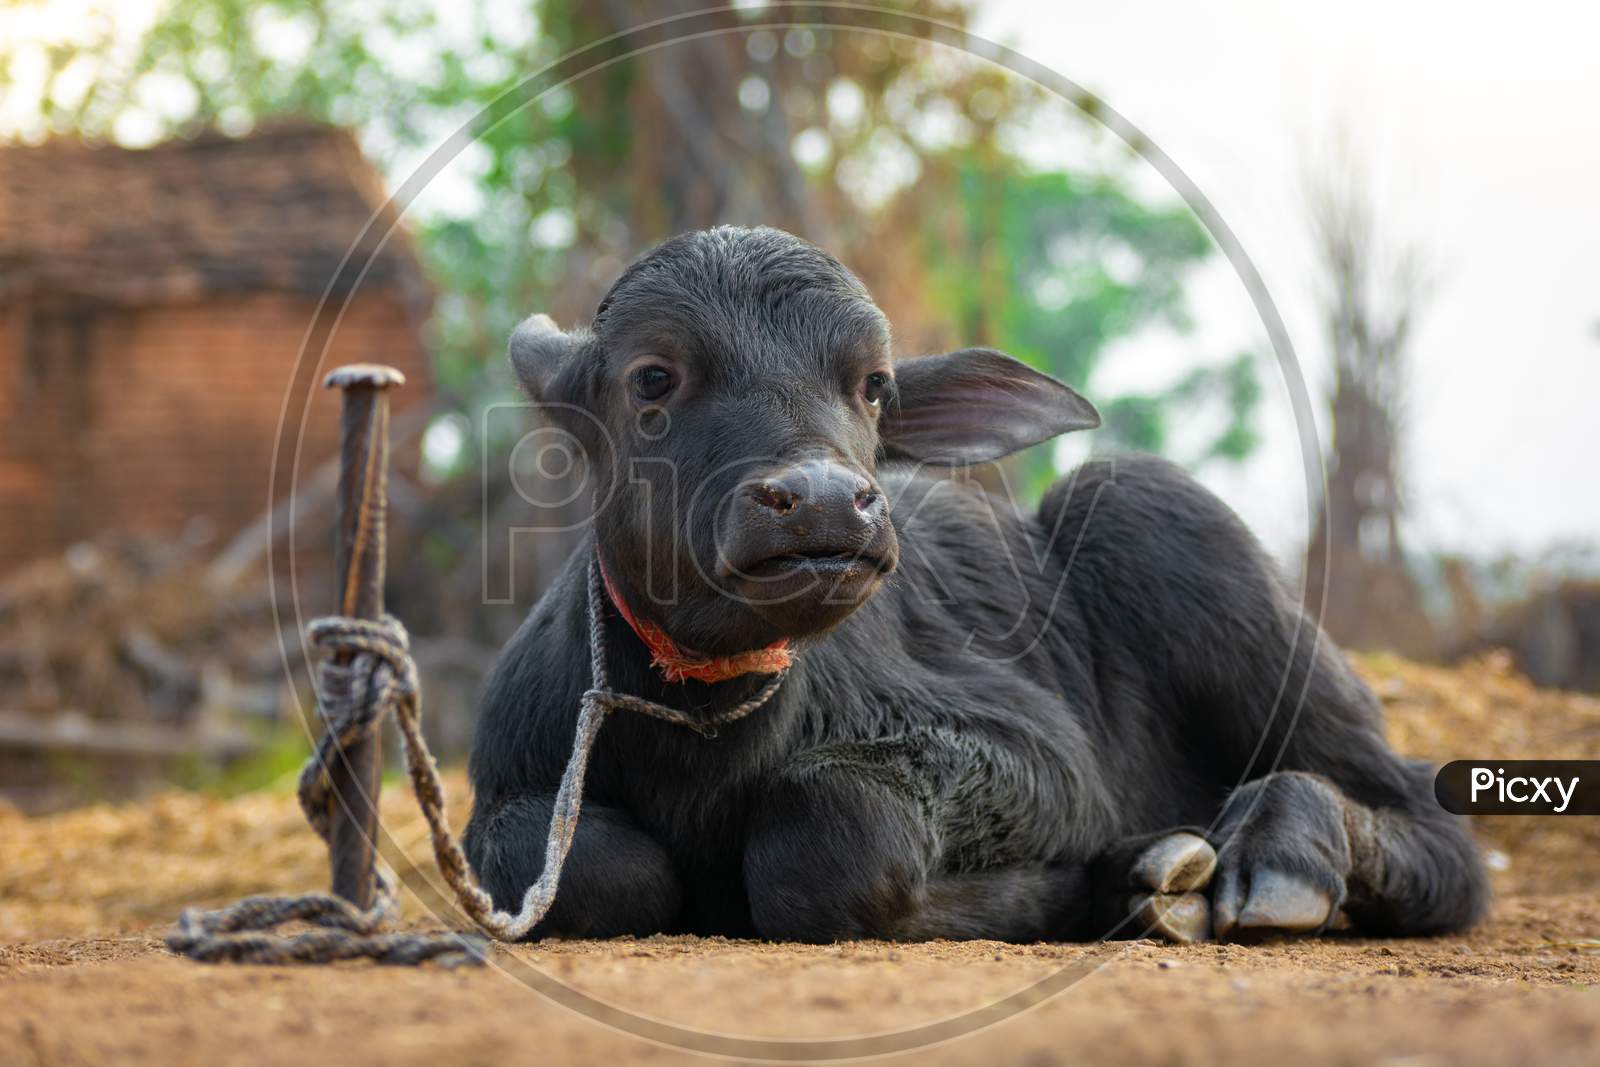 Baby buffalo in rural village